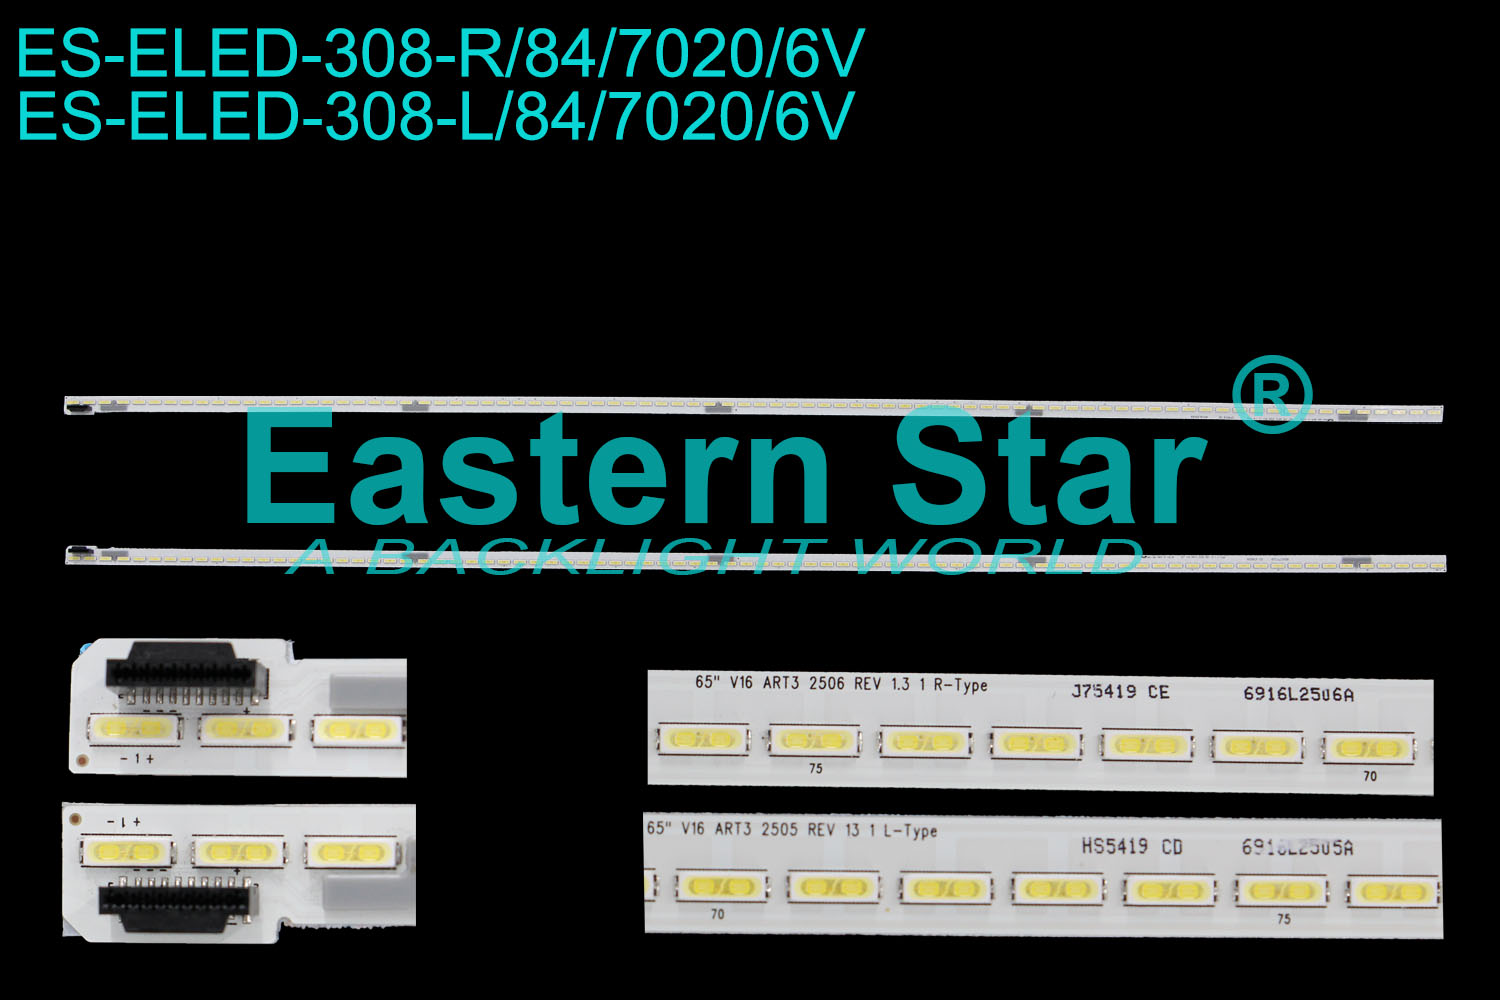 ES-ELED-308 ELED/EDGE TV backlight use for LG 65'' TV 65UH7700-UB 65'' V16 ART3 2506 REV 1.3 1 R-Type  J75419 CE  6916L2506A    65'' V16 ART3 2505 REV 1.3 1 L-Type  HS5419 CD  6916L2505A  LED STRIPS(2)